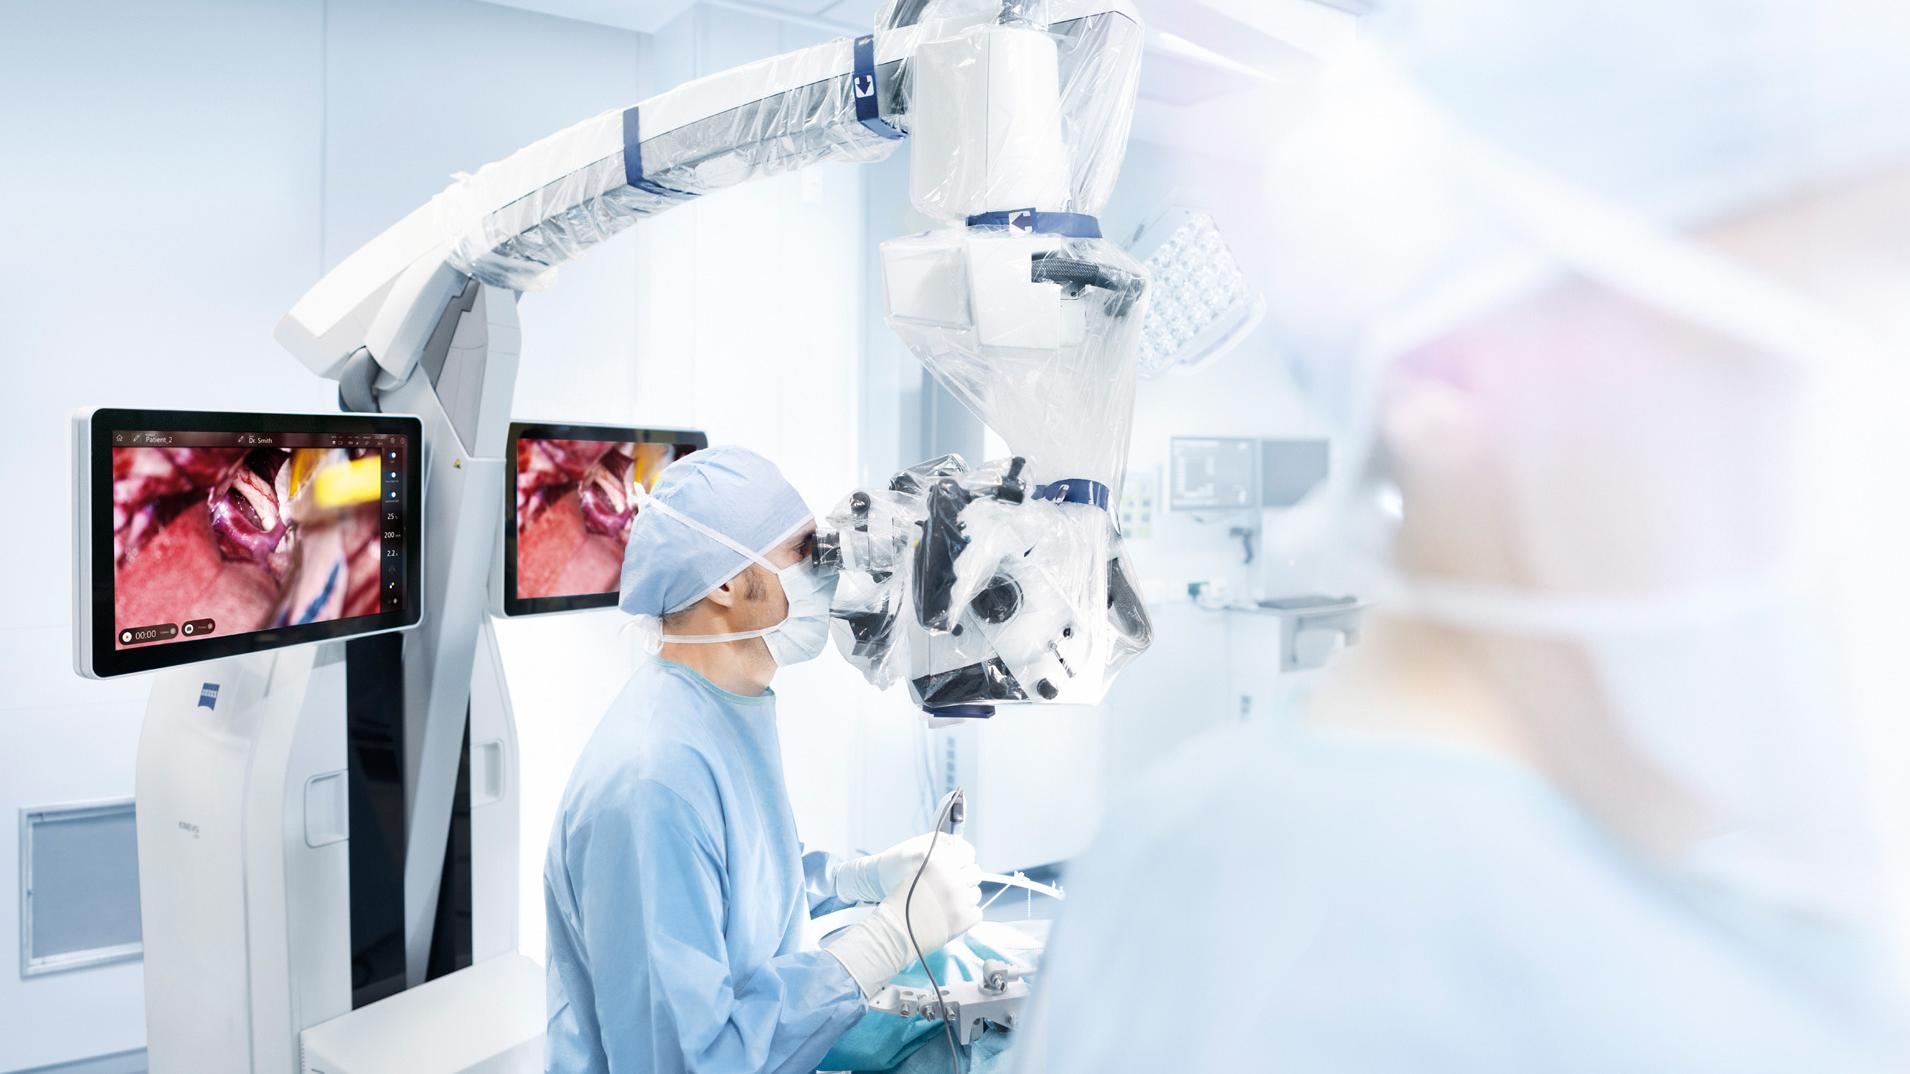 Surgeon-controlled robotics